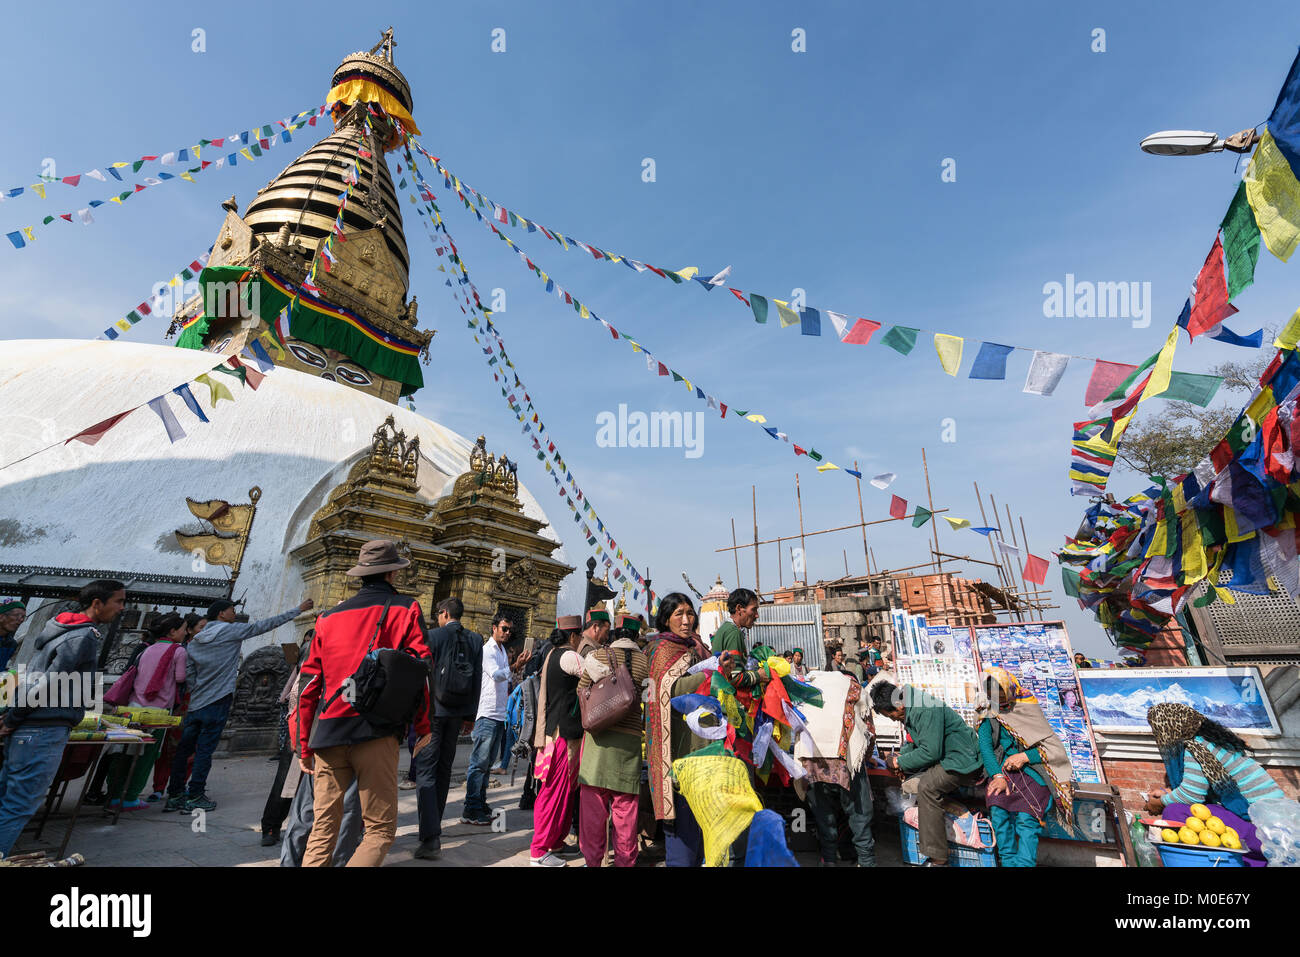 In Swayambhunath Stupa in Kathmandu, Nepal Stockfoto